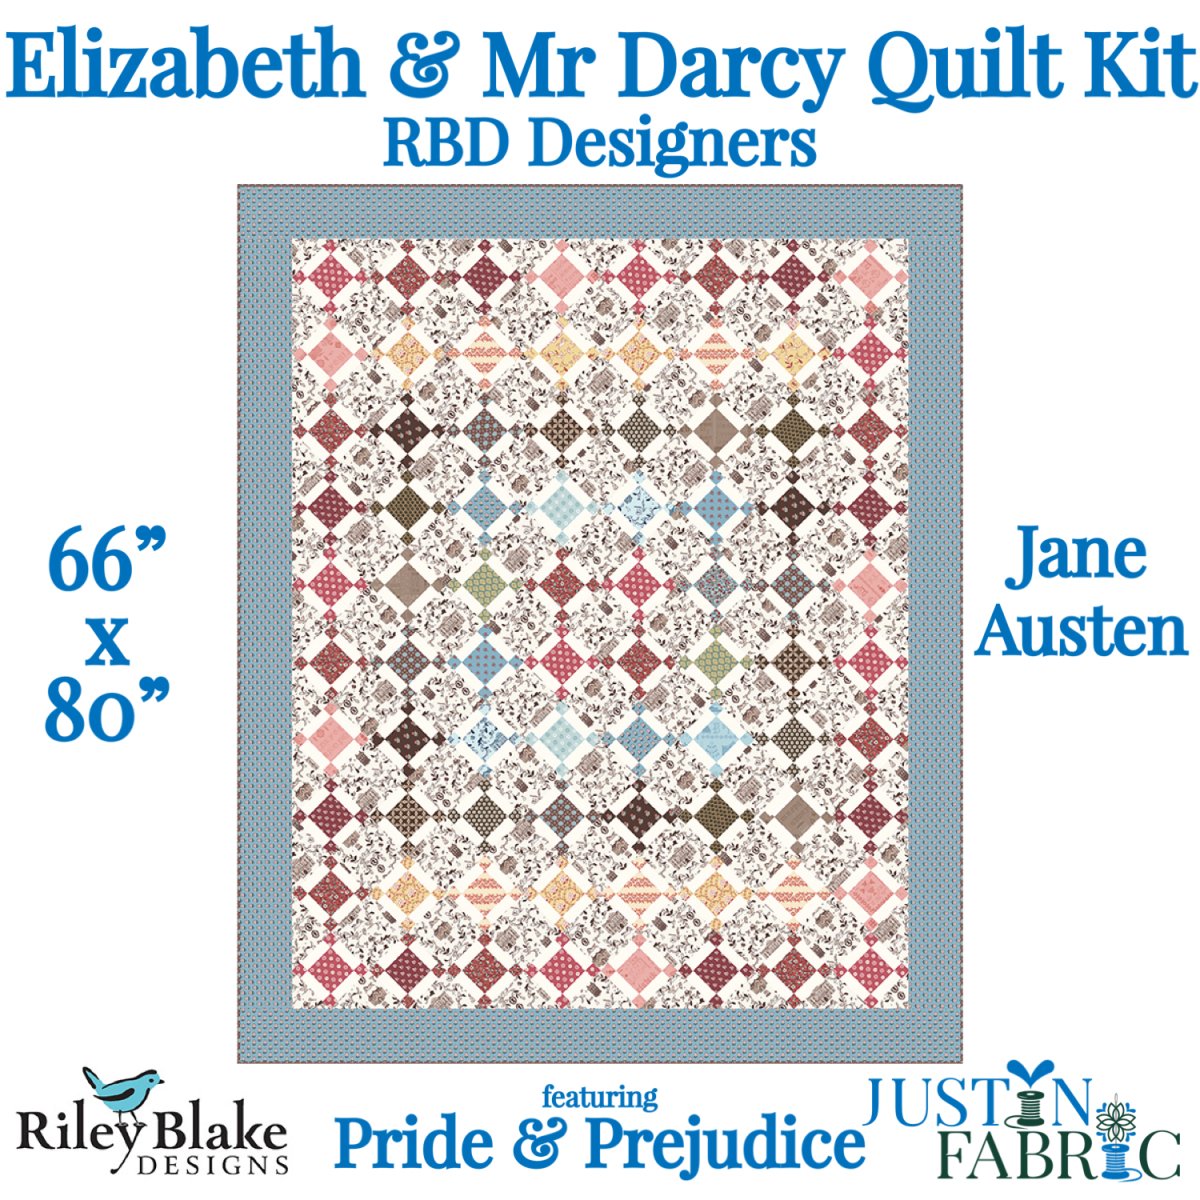 Elizabeth & Mr. Darcy Pride & Prejudice Quilt Kit by the RBD Designers | Riley Blake Designs